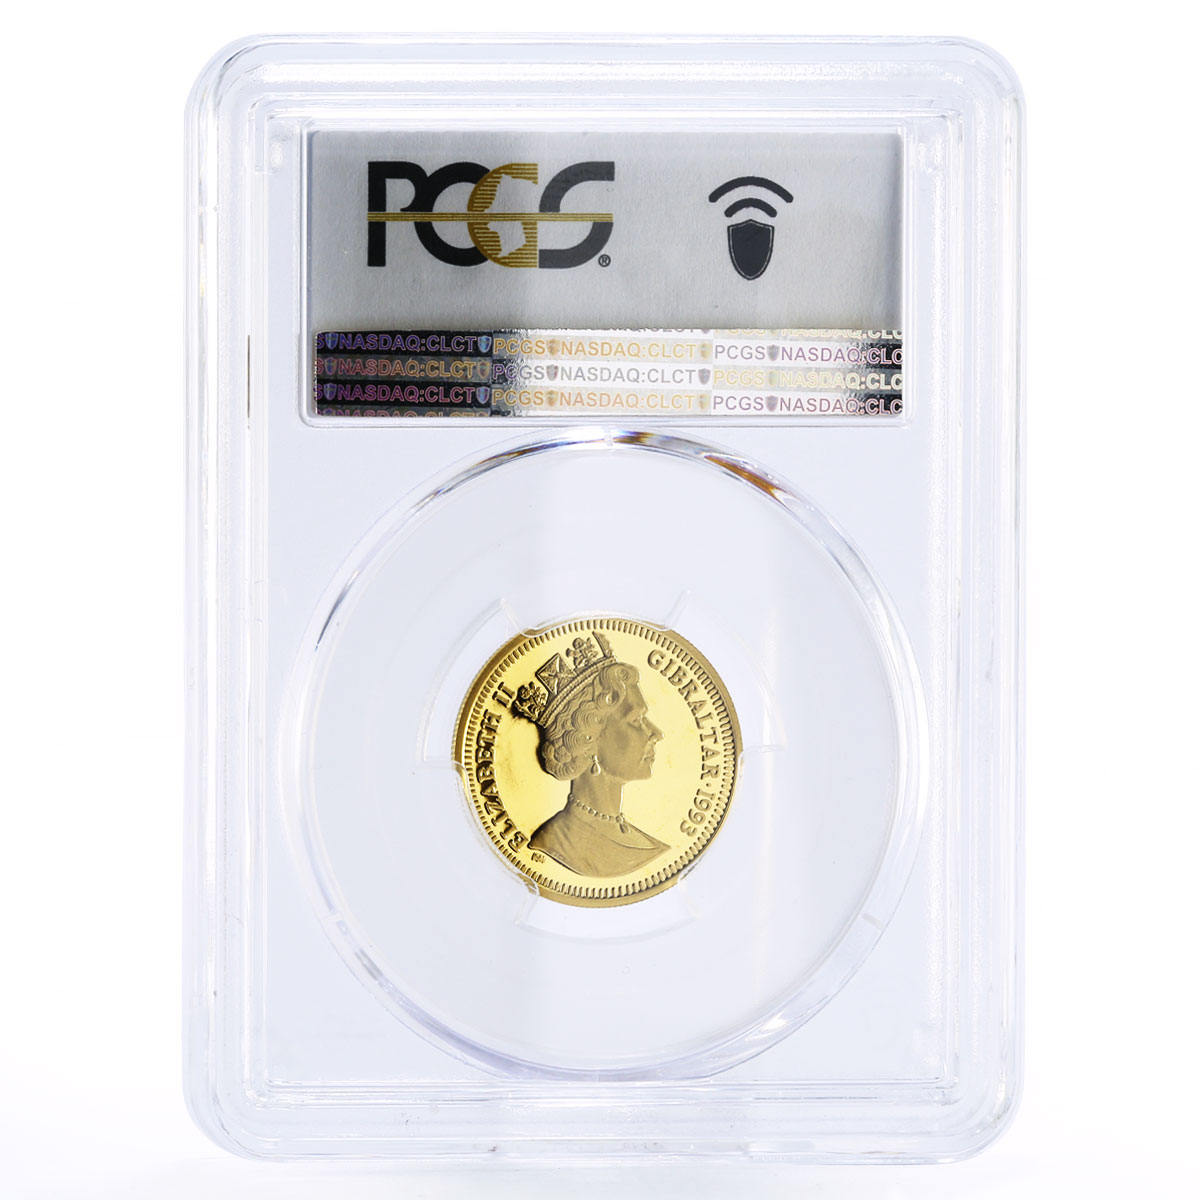 Gibraltar 1,5 crowns Peter Rabbit Mrs Tiggy - Winkle PR69 PCGS gold coin 1993